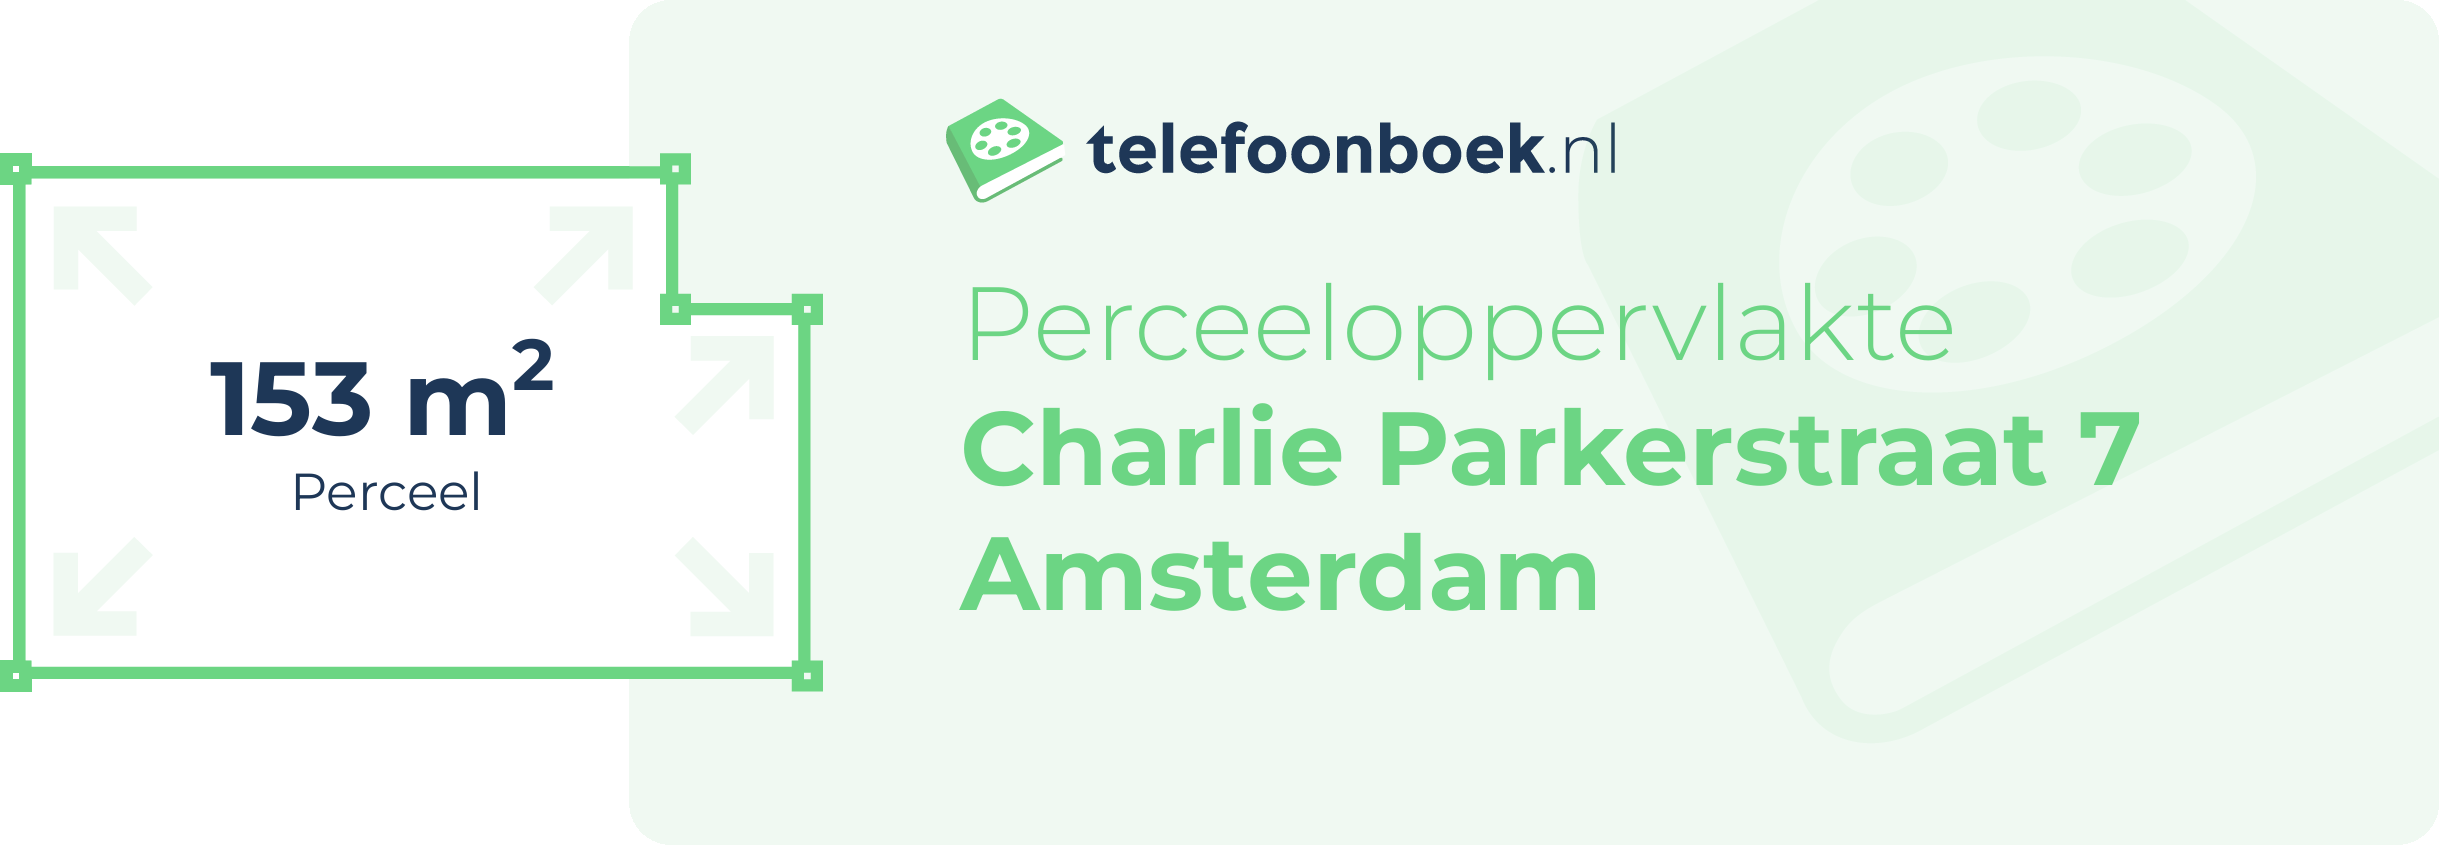 Perceeloppervlakte Charlie Parkerstraat 7 Amsterdam